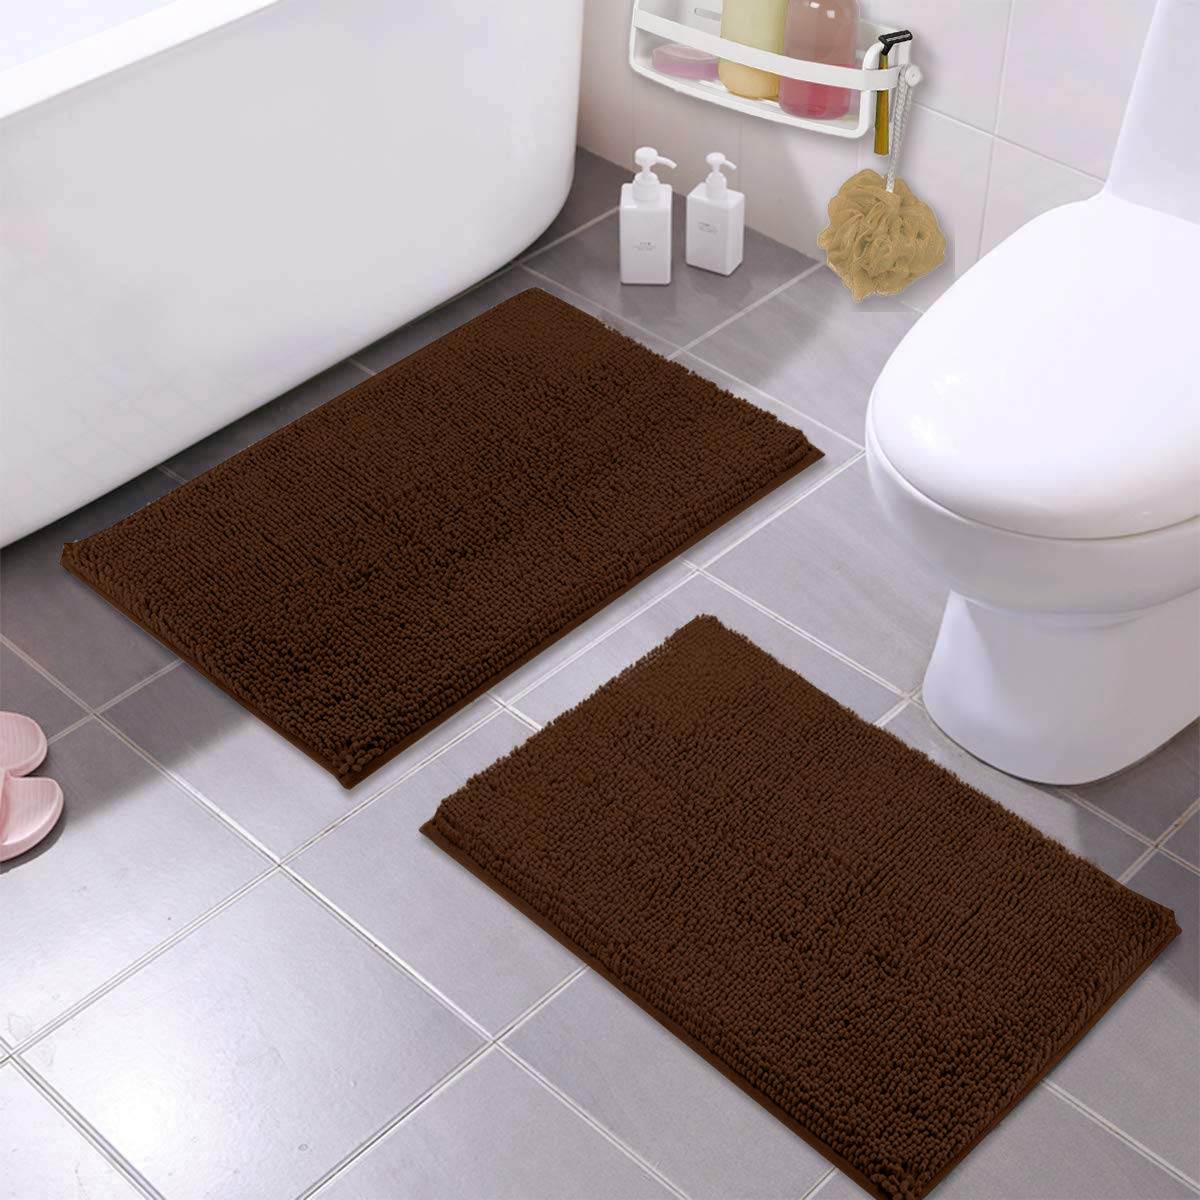 LuxUrux Bathroom Rug Mat Set�Extra-Soft Plush Bath mat Shower Bathroom Rugs 16 x 24 inch Set,1'' Chenille Microfiber Material, Super Absorbent. (15 x 23'', Brown)  - Like New